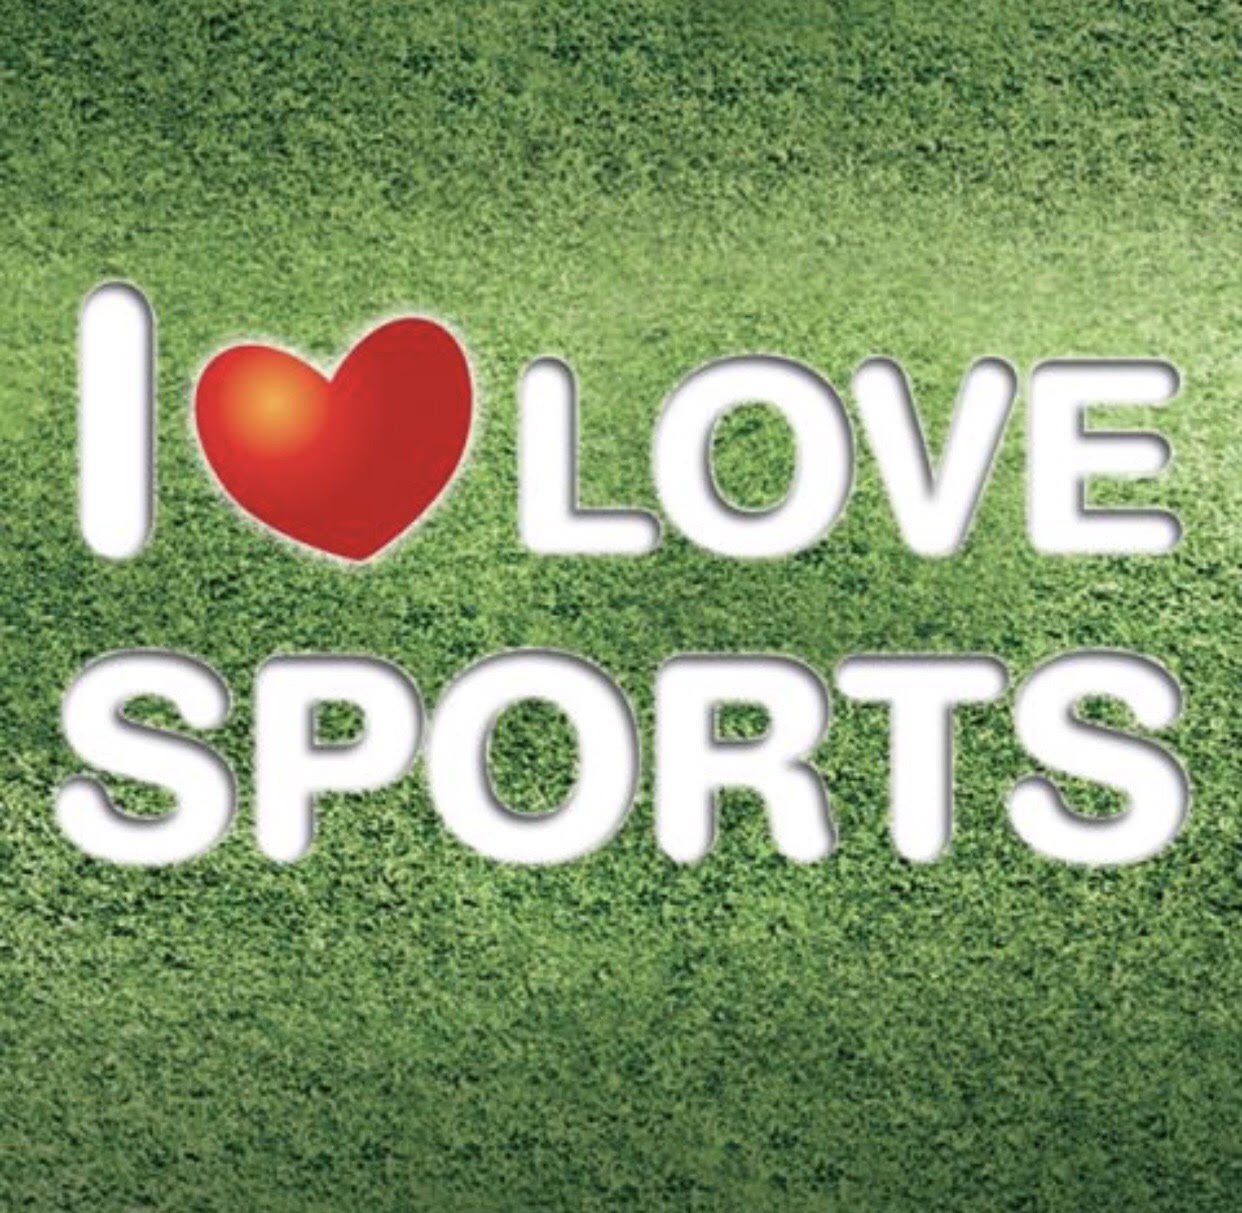 He love sport. Спорт надпись. Спорт лов. Love Sport надпись. I Love Sport фото.